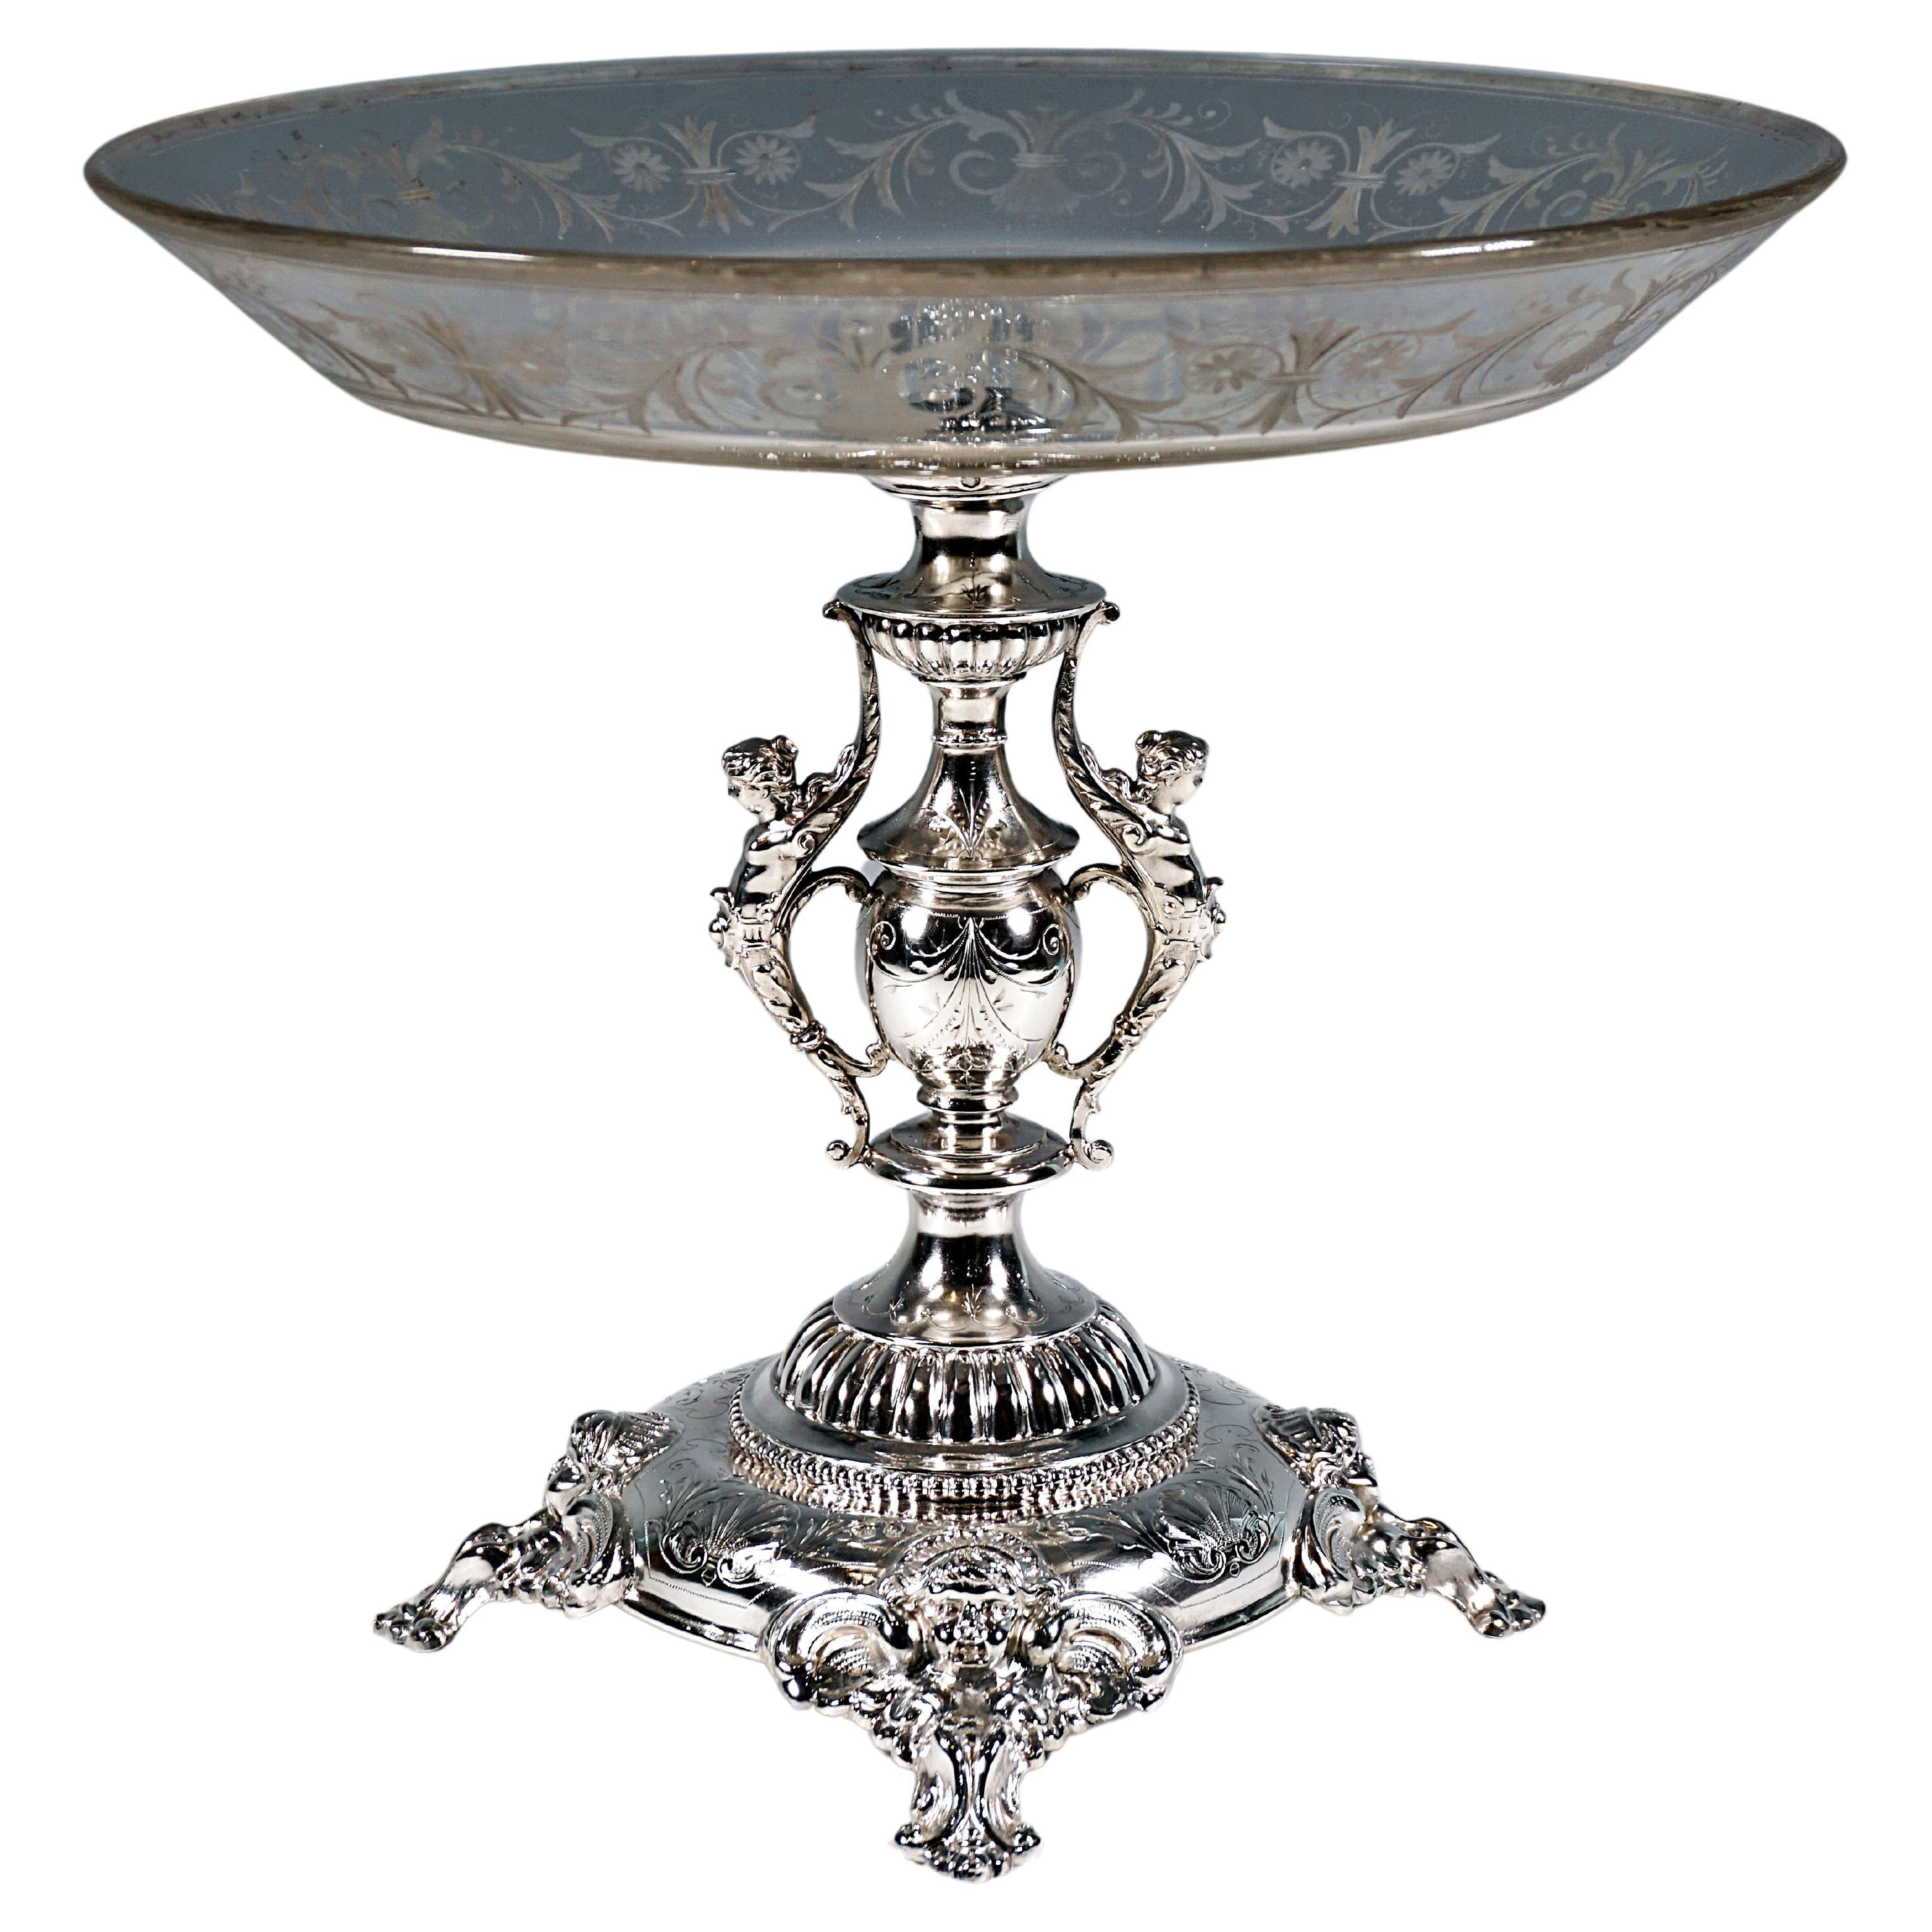 Viennese Art Nouveau Silver Centerpiece With Original Glass Bowl, Around 1900 For Sale